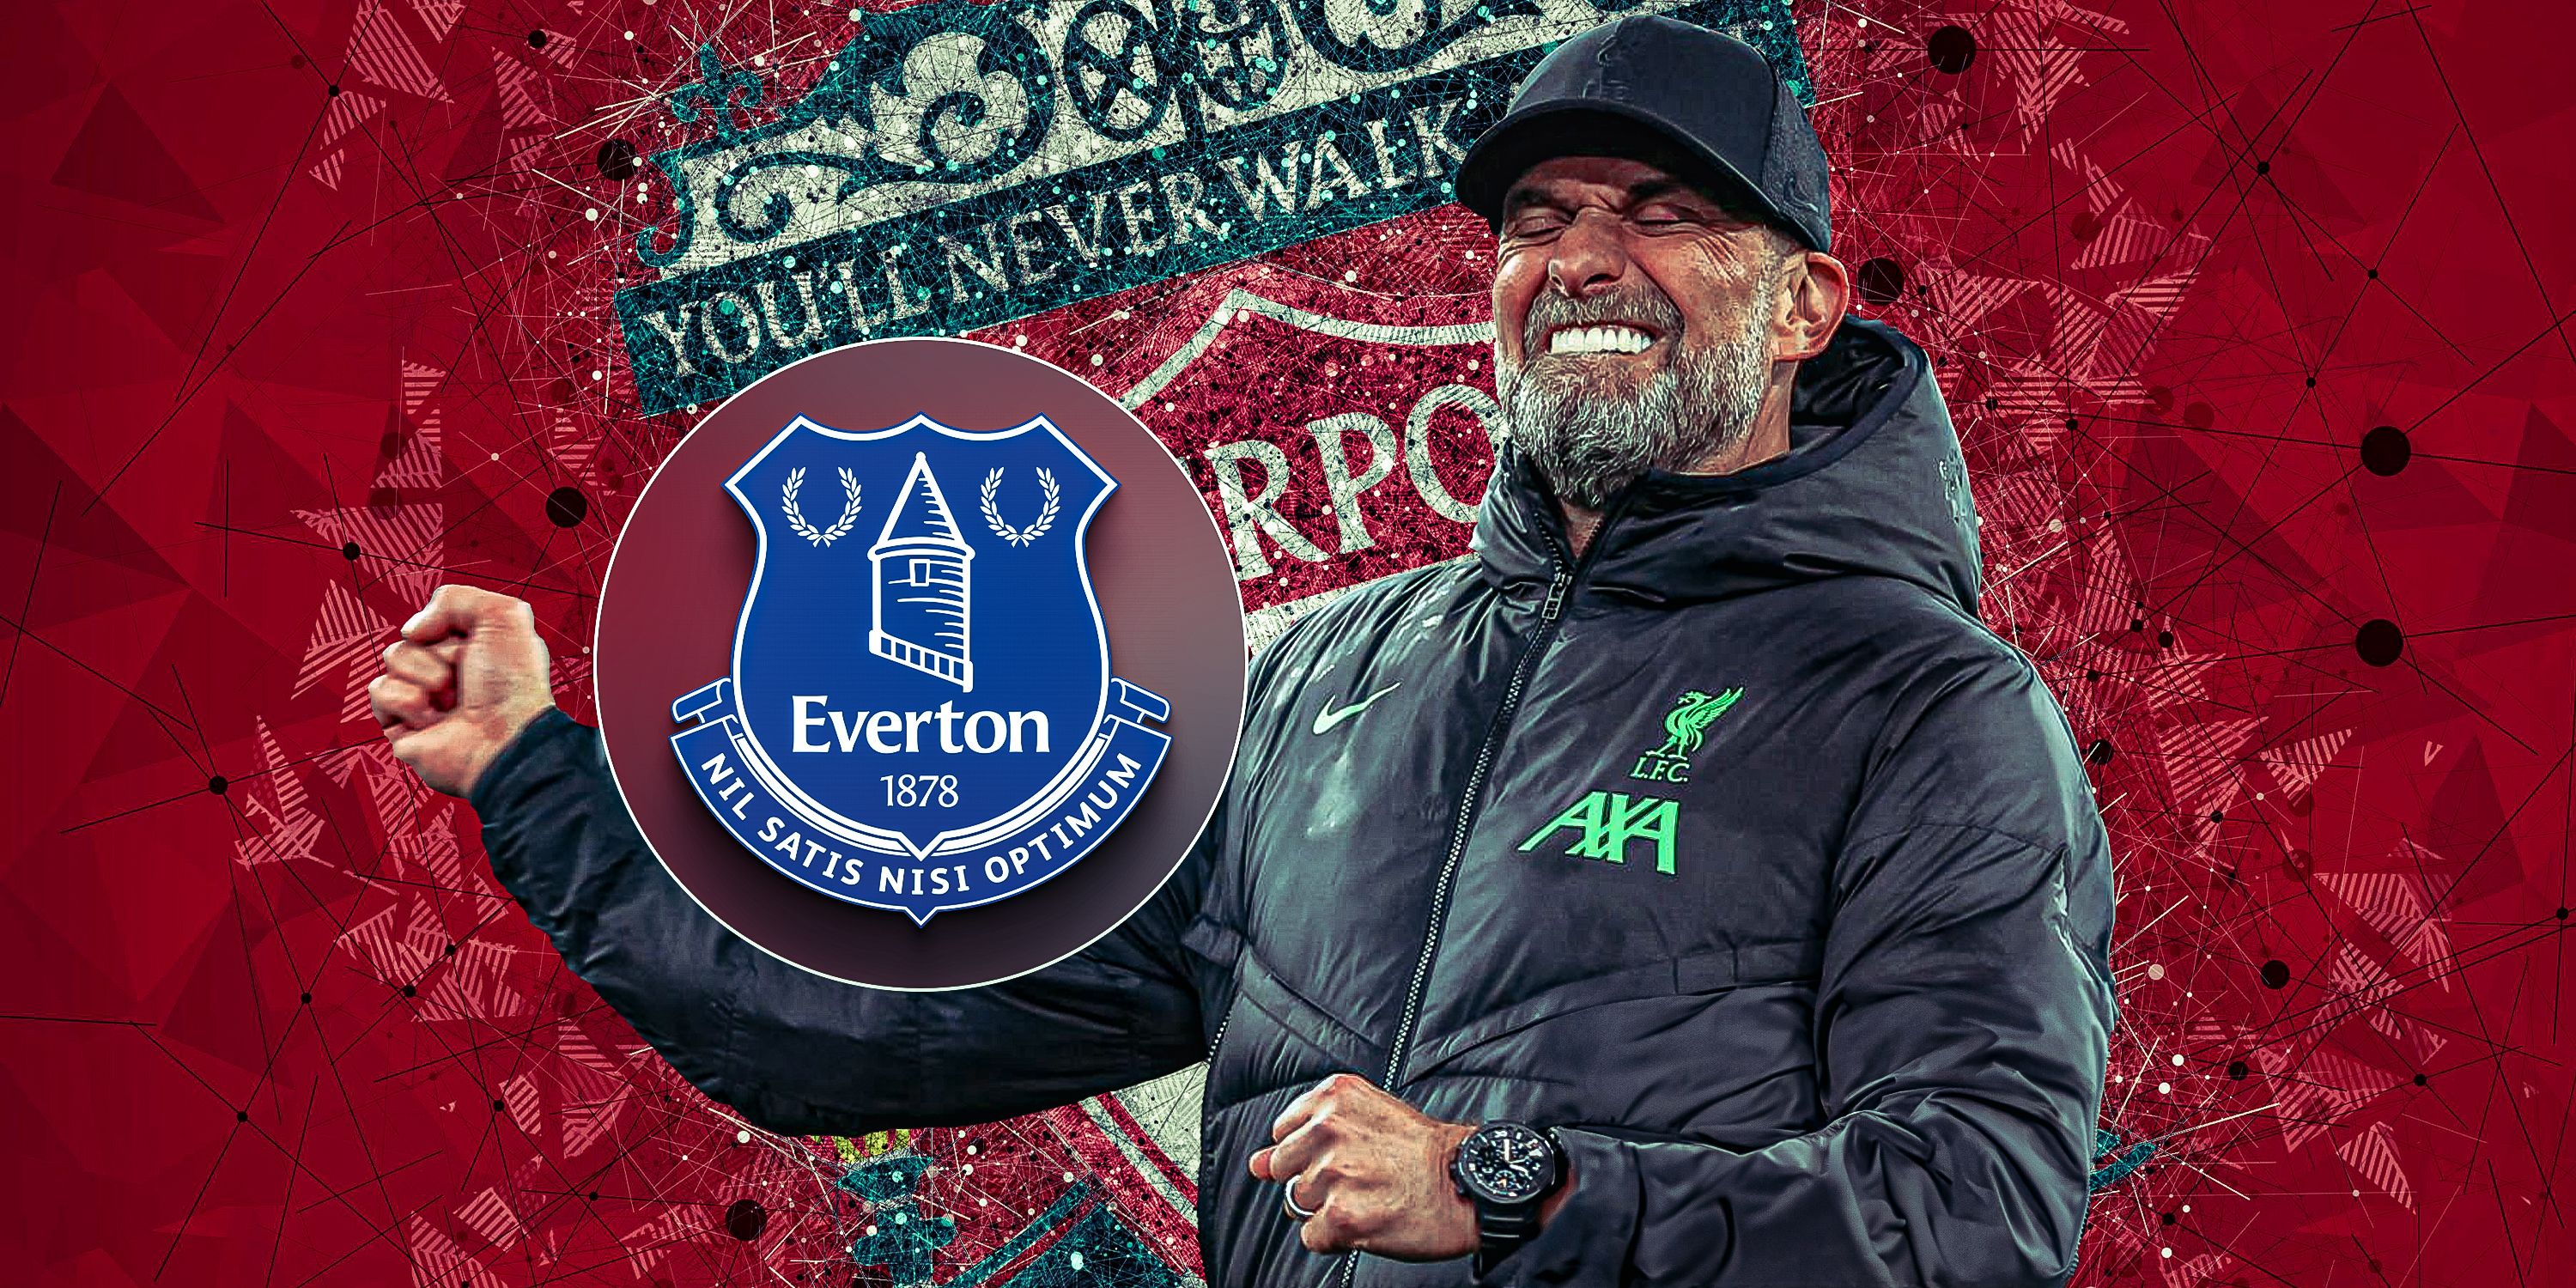 A custom image of Jurgen Klopp celebrating next to the Everton badge